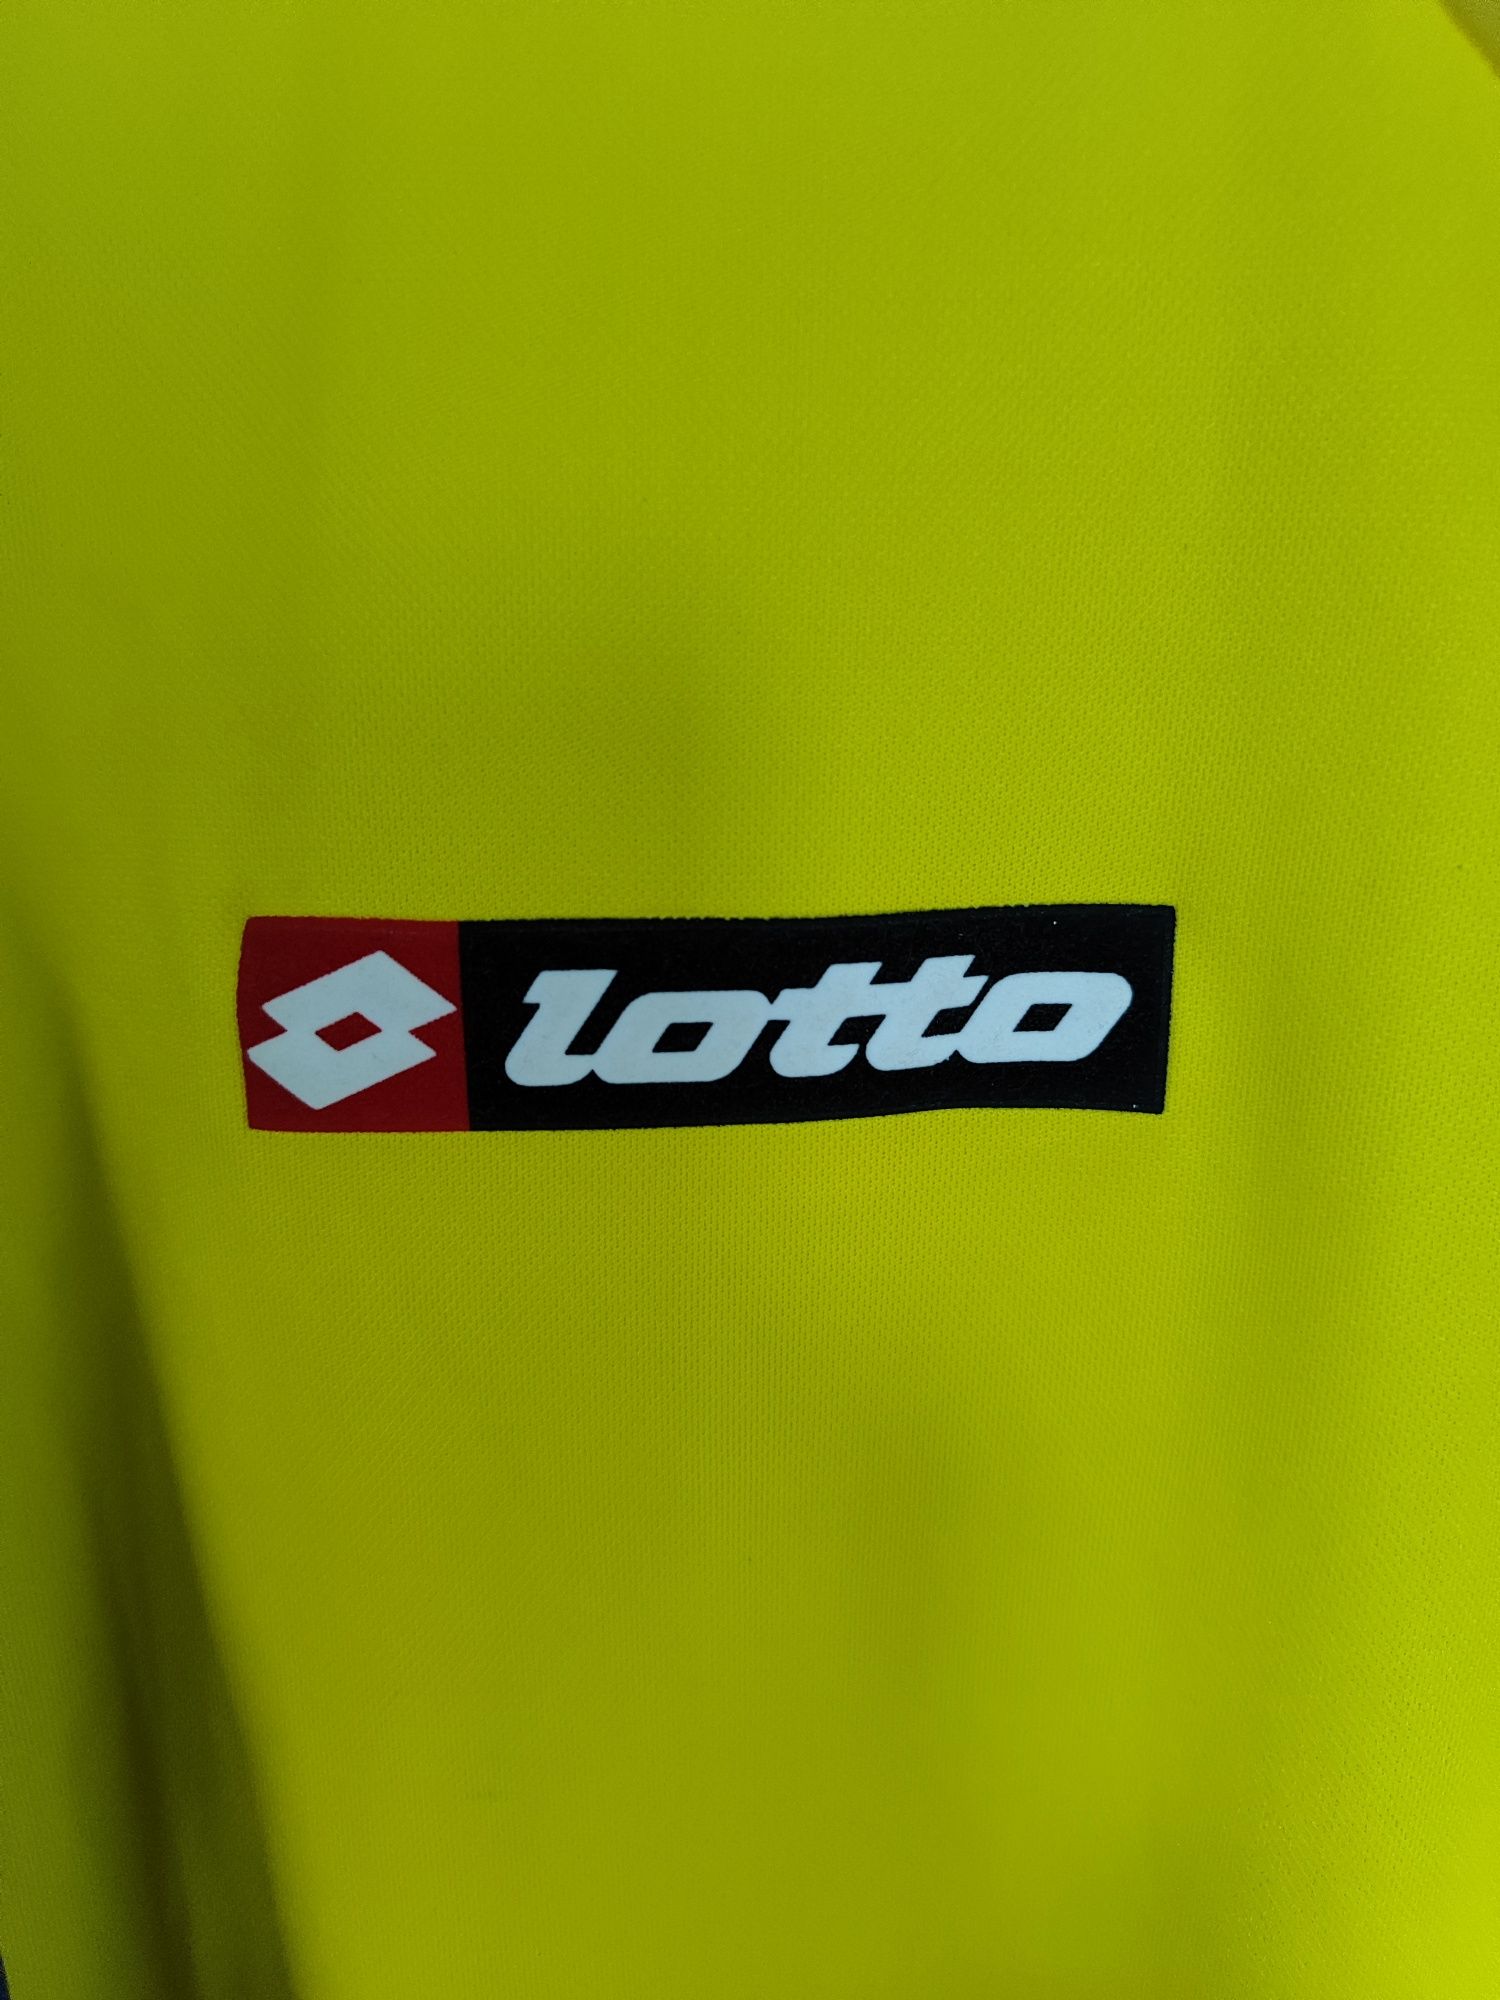 Koszulka piłkarska męska Lotto AC Chievo Verona 2007/08 rozmiar XL